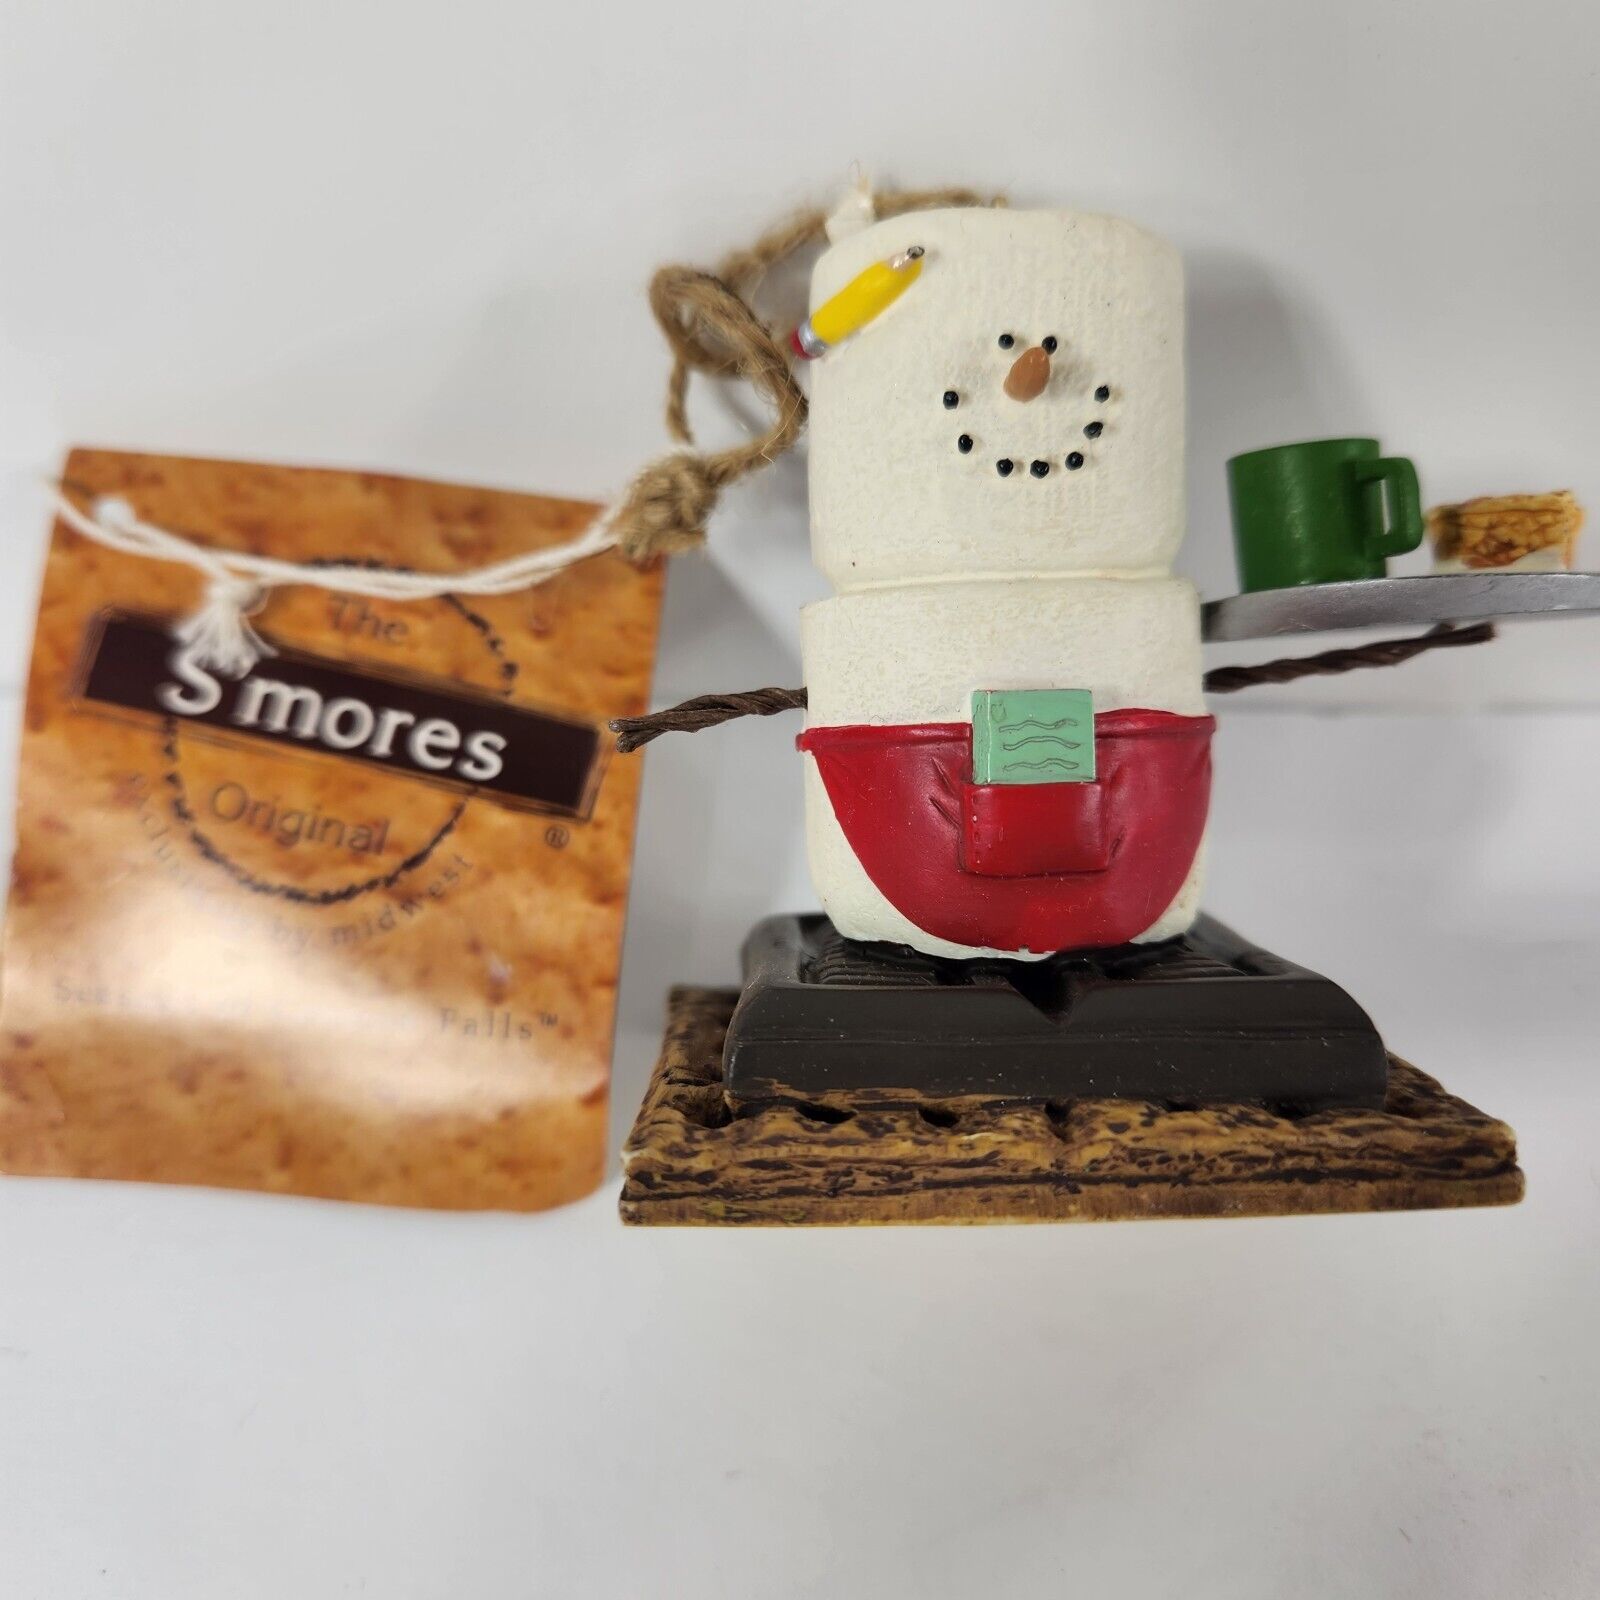 S’mores Original Waiter/Waitress/Server/Restaurant Christmas Ornament By Midwest